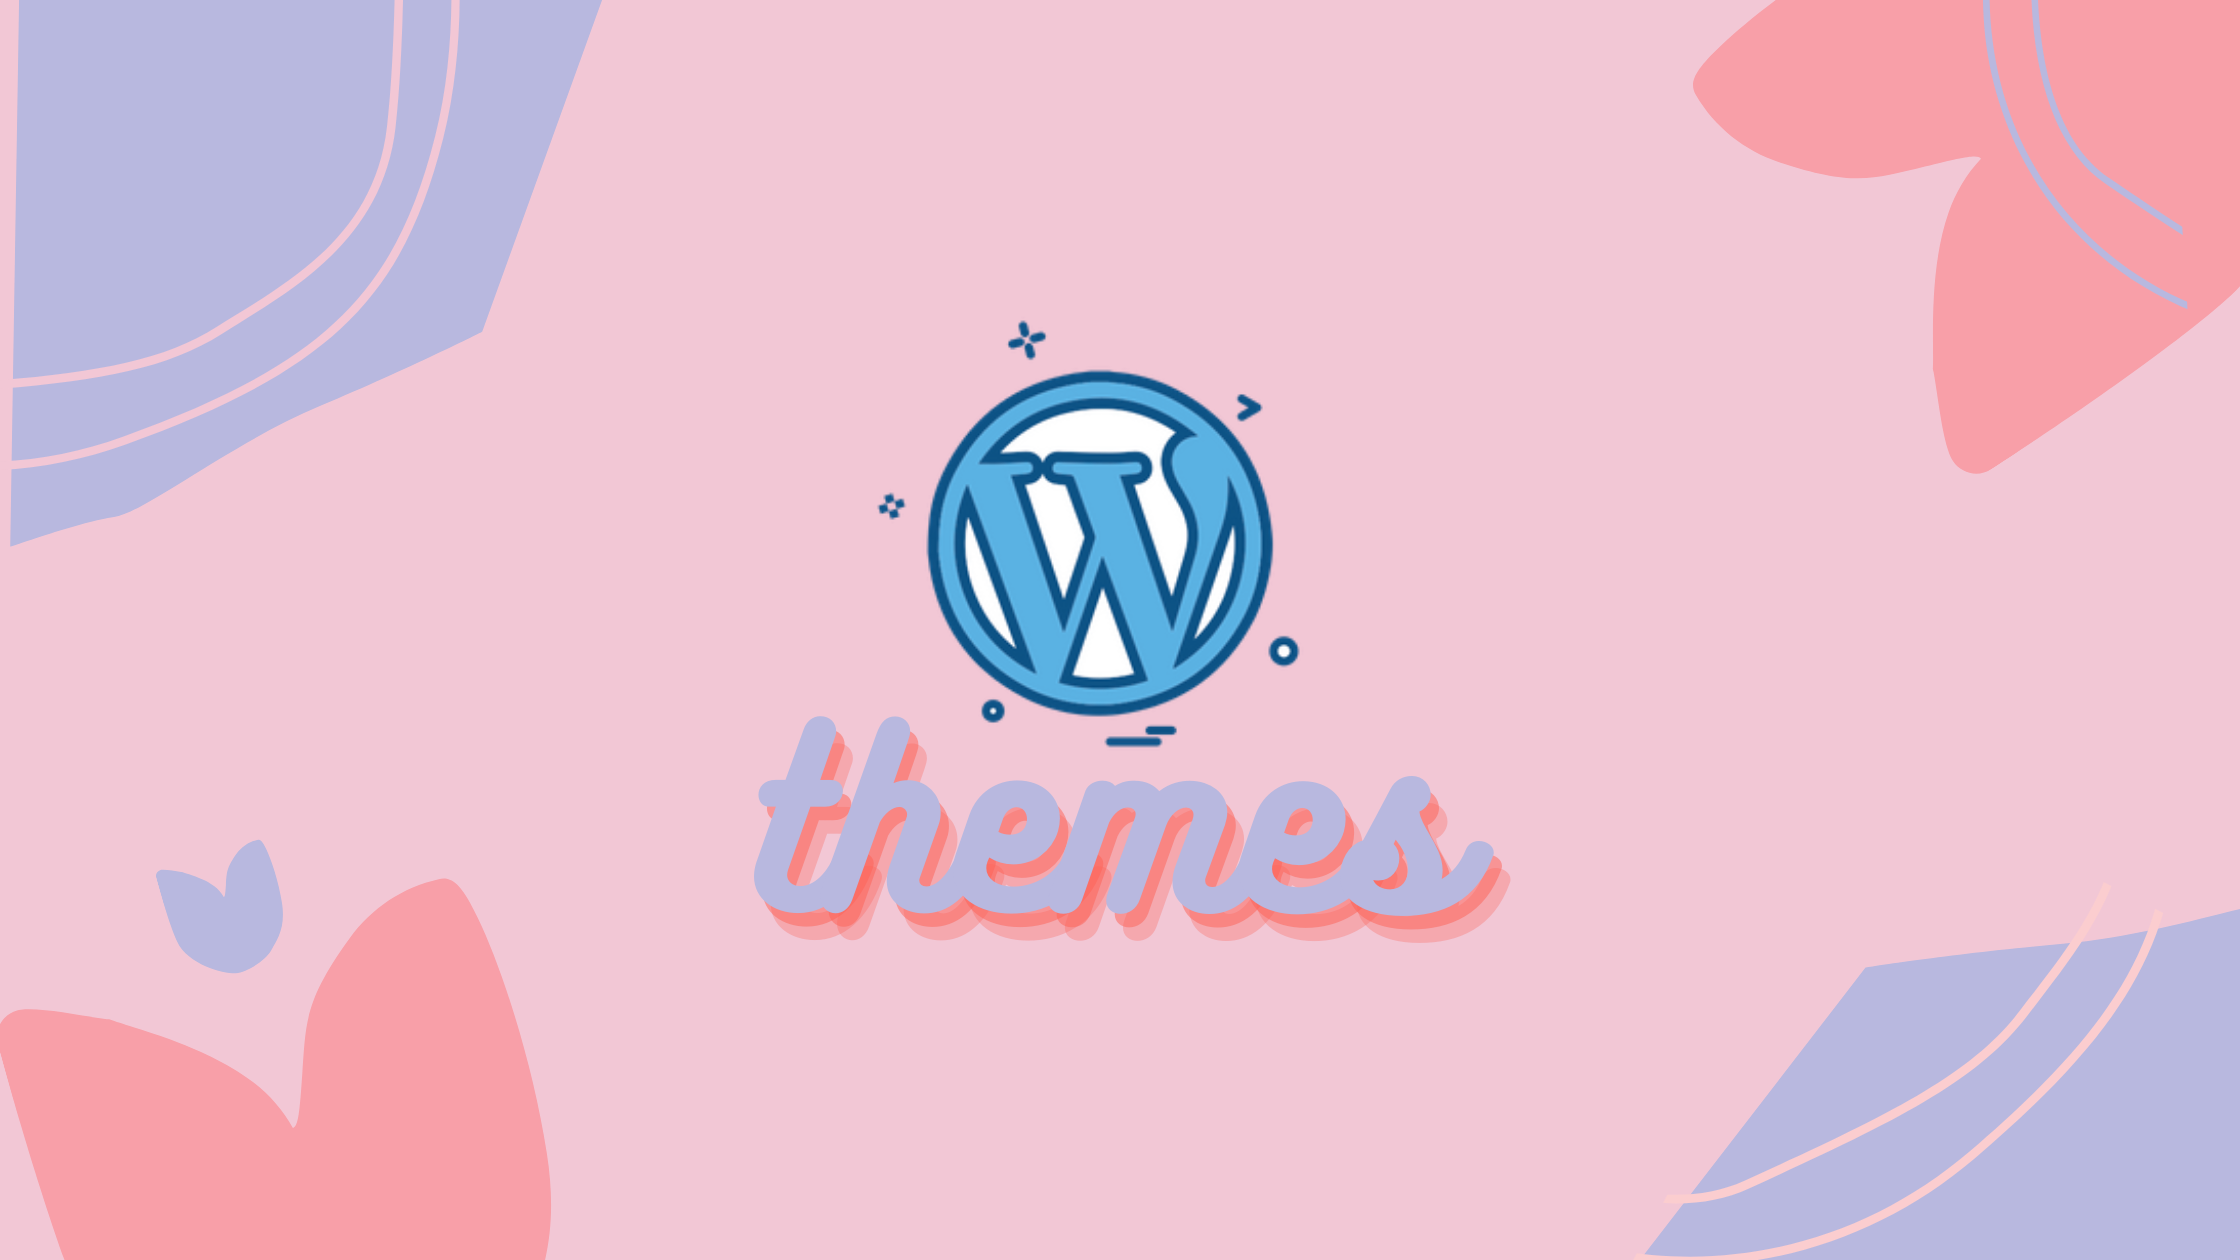 Best free WordPress themes